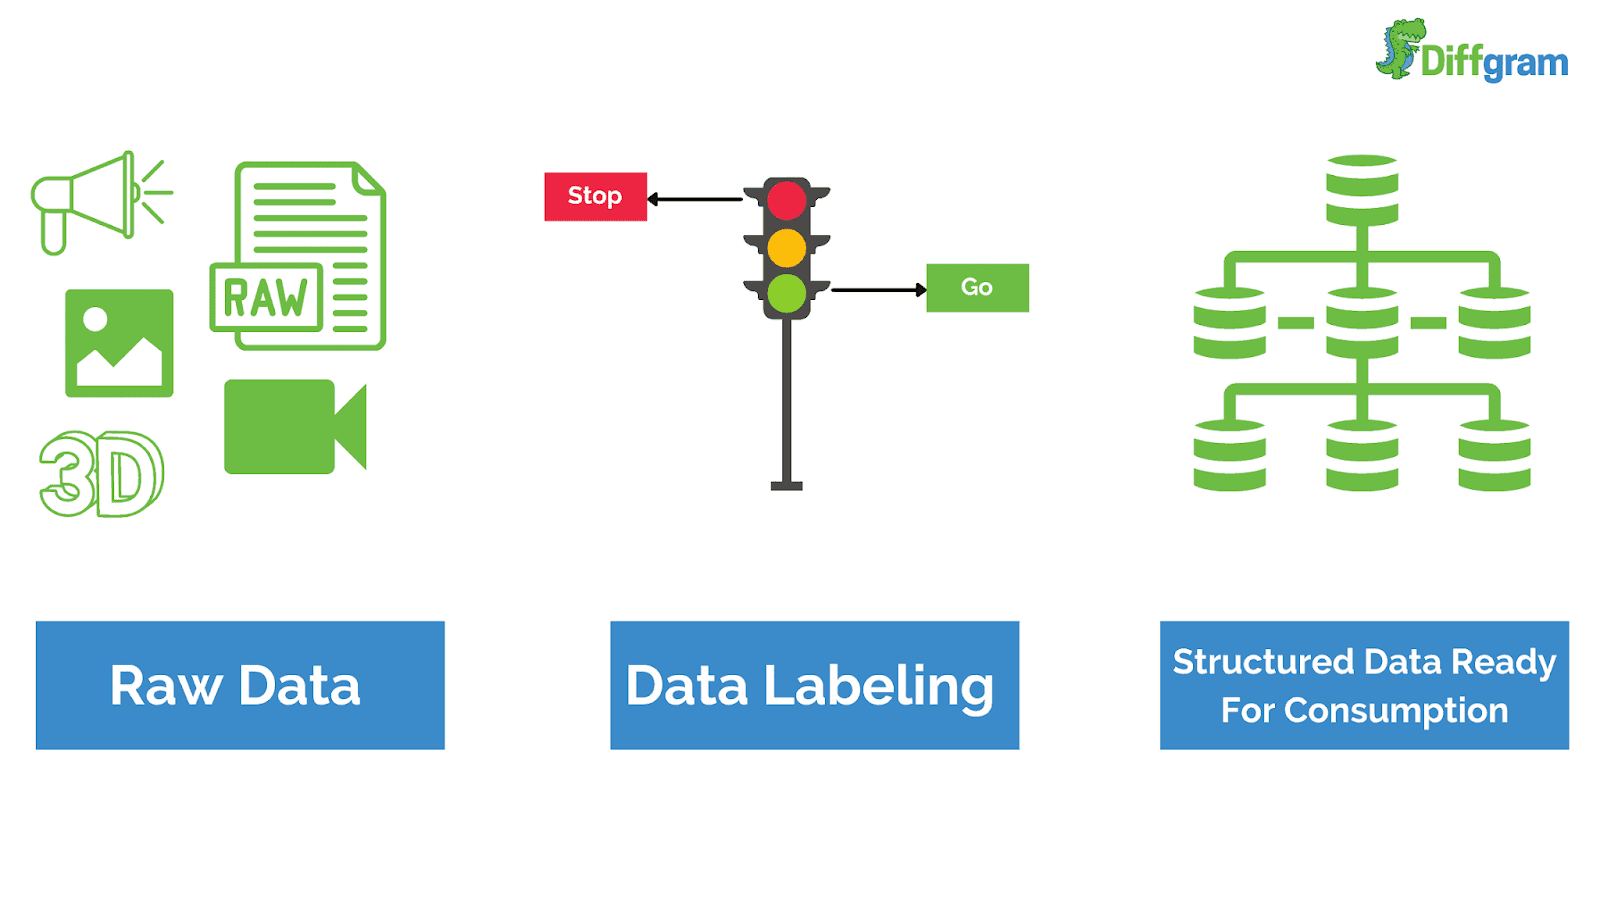 Data labeling